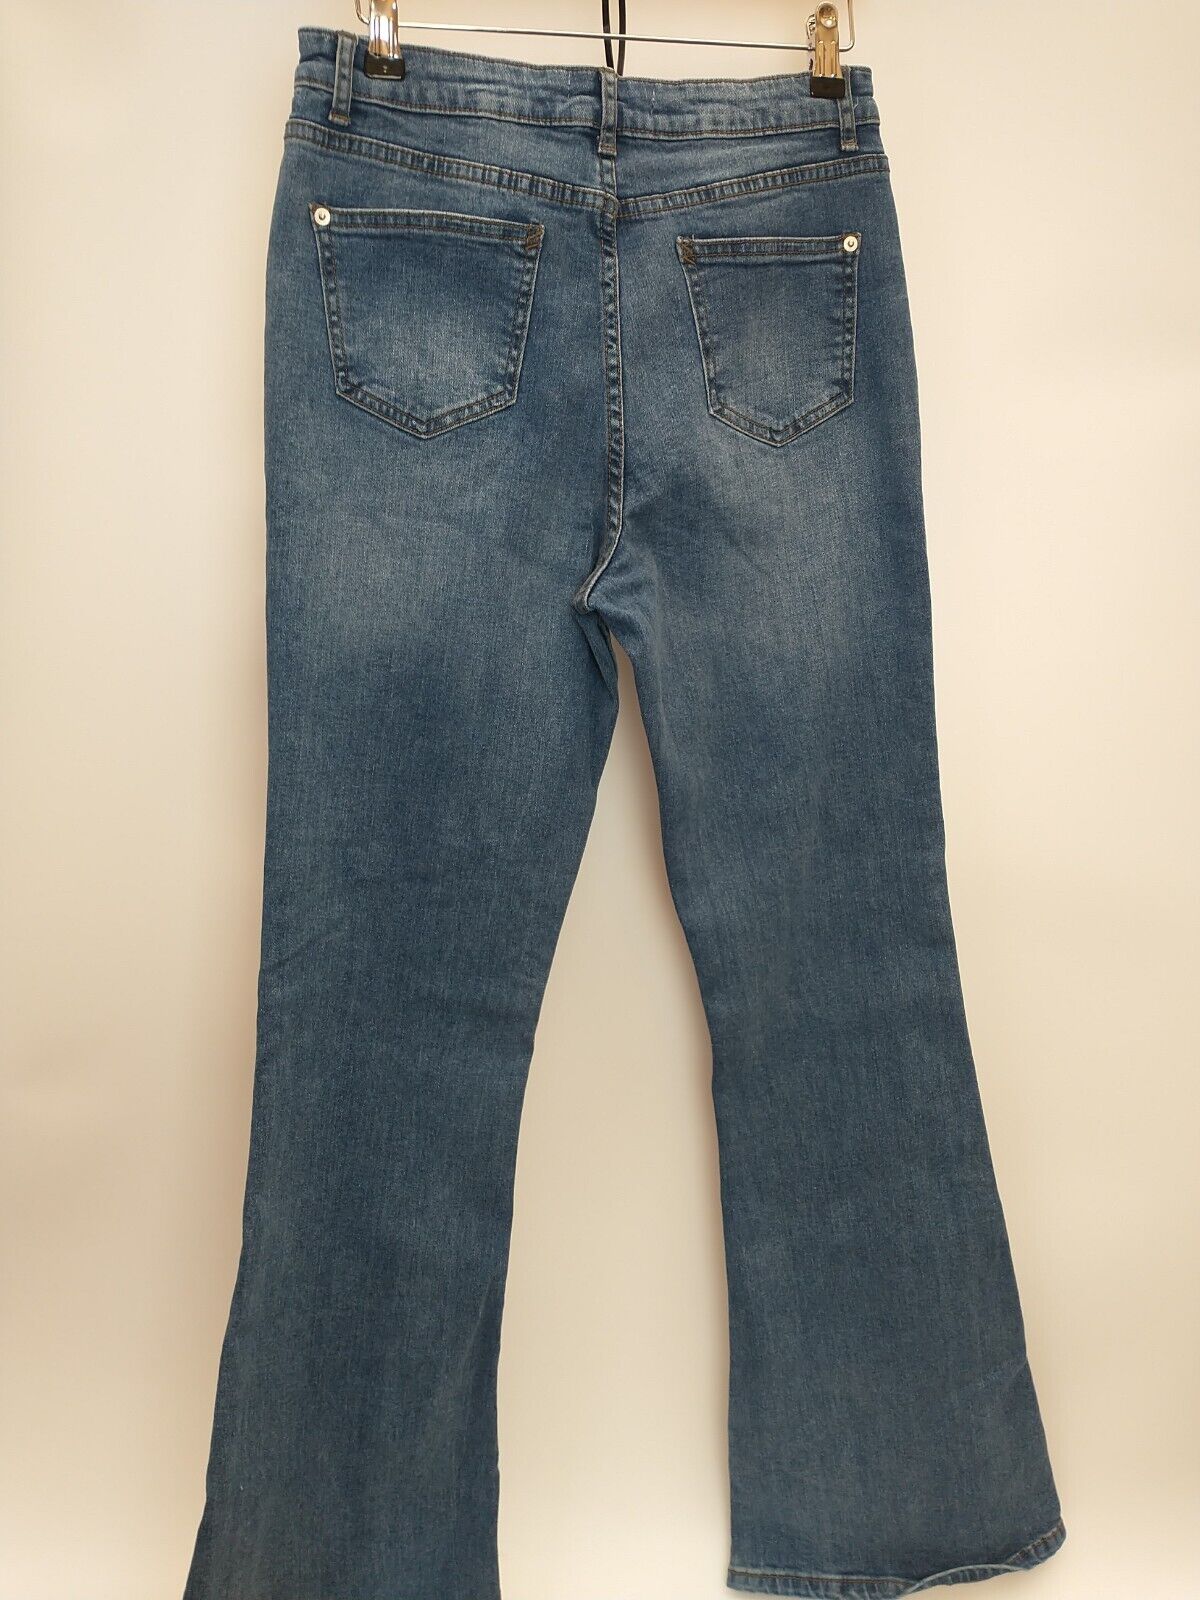 Missguided Slim Fit Flared Jeans Size UK 6 **** V234